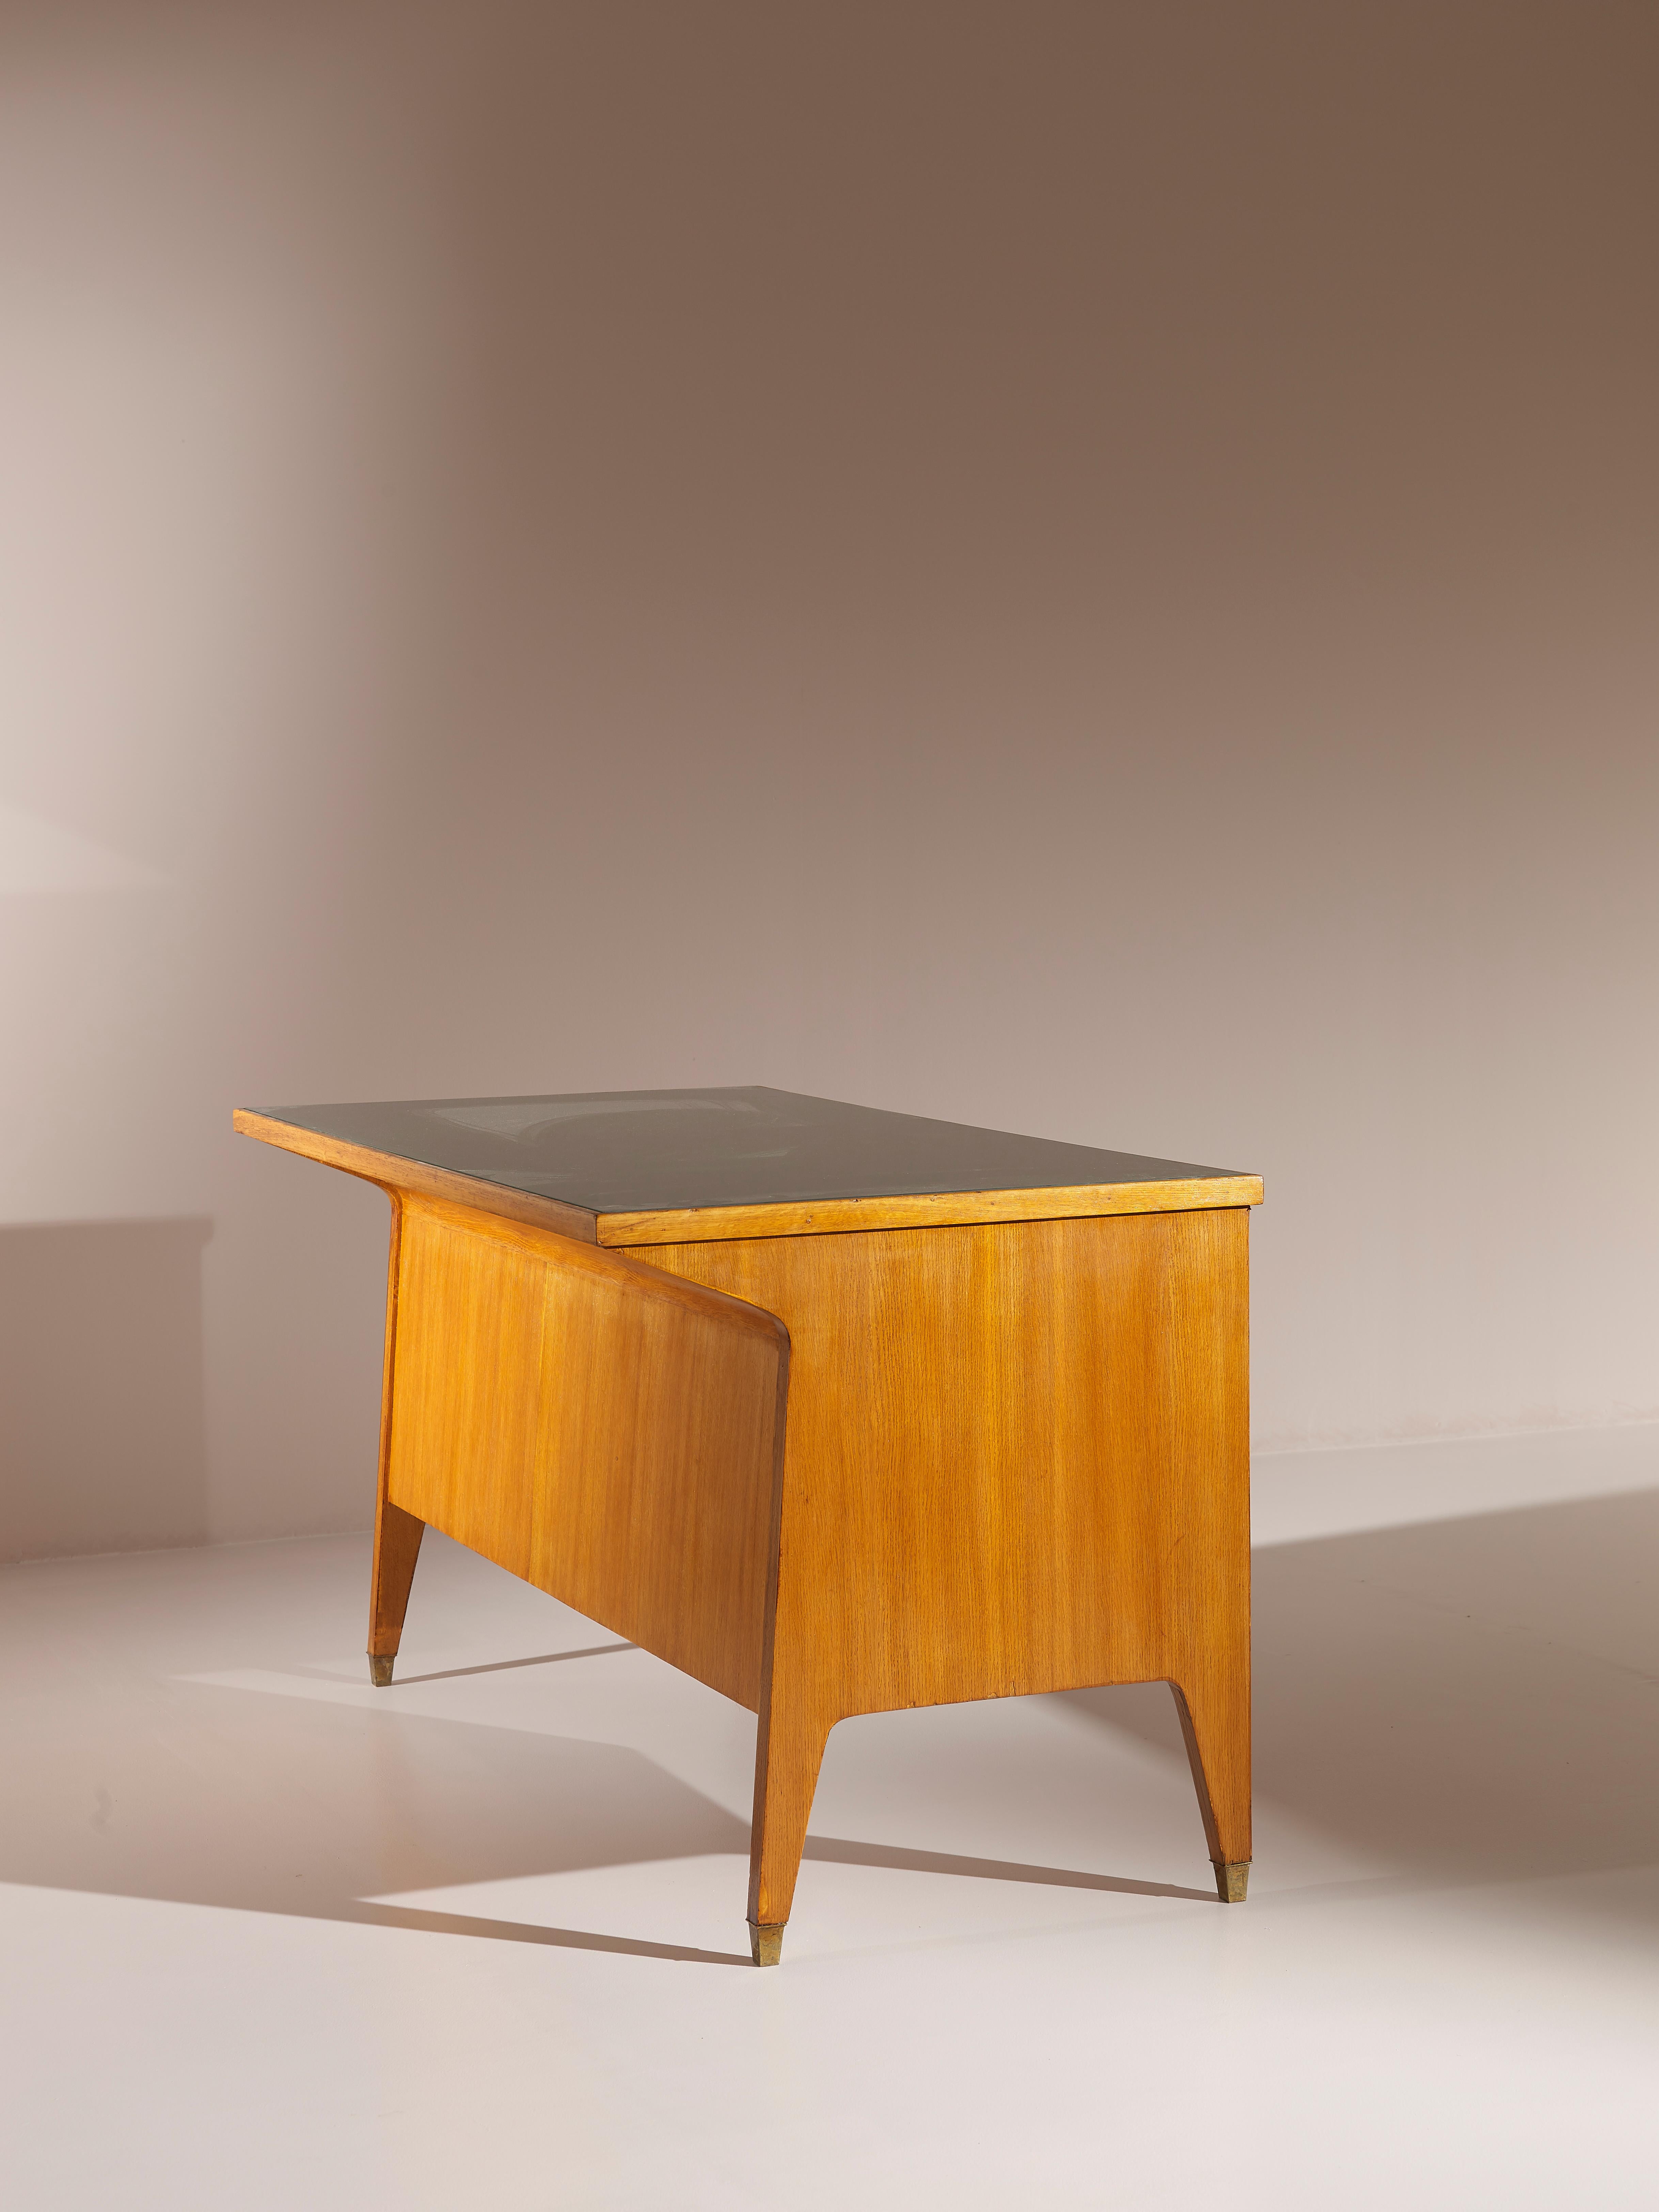 Mid-Century Modern Italian Mid-Century Oak Desk Gio Ponti Inspired, with Brass Feet and Glass Top